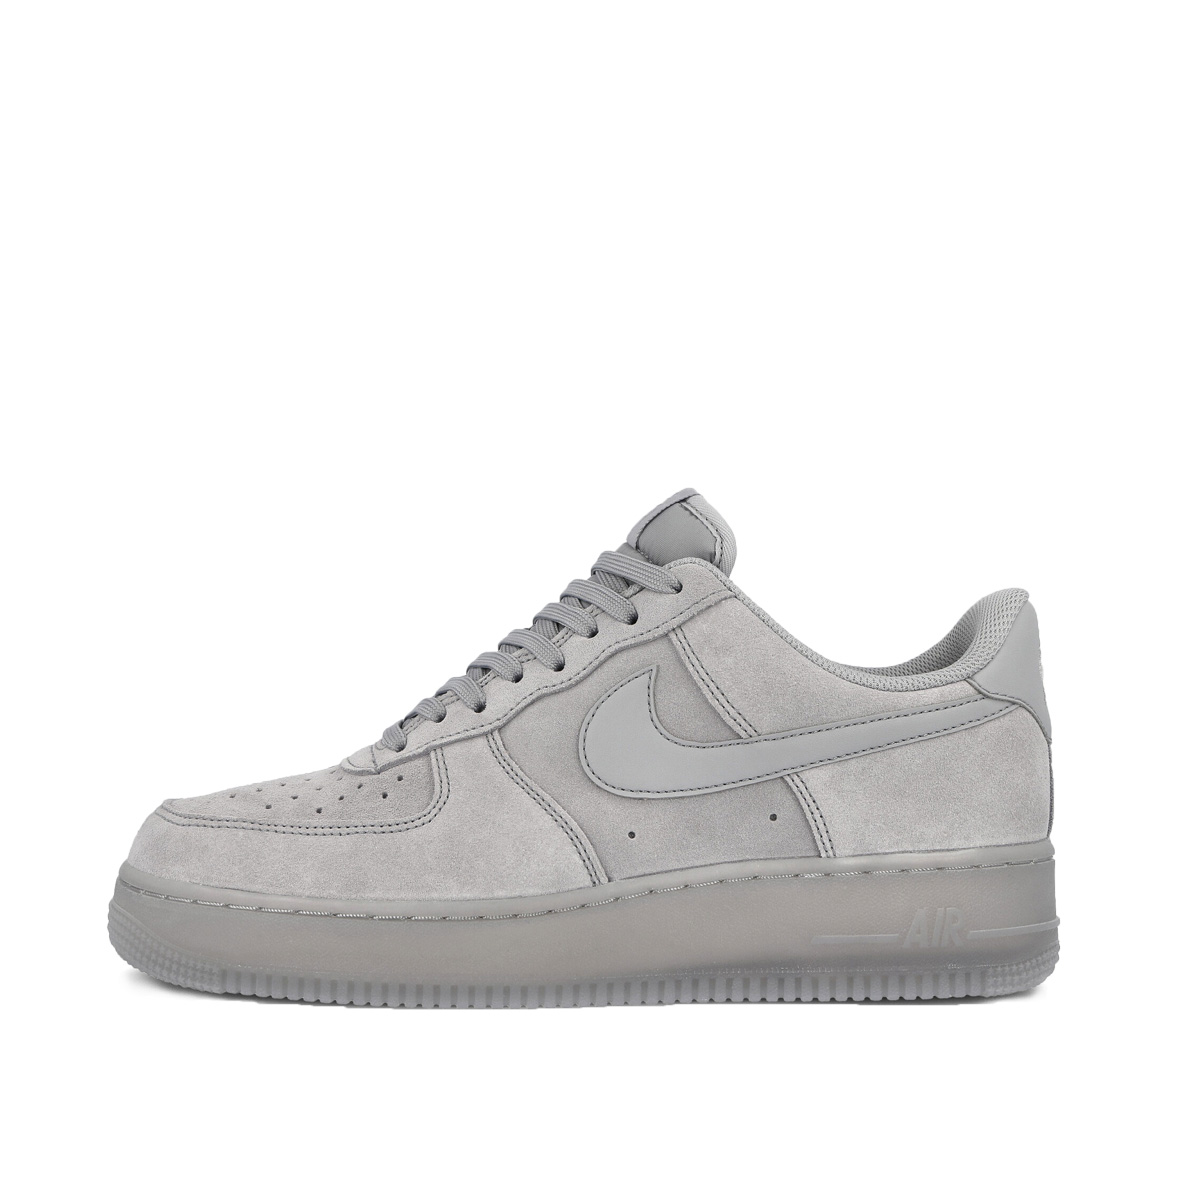 Nike Air Force 1 '07 LV8 Grey Suede (2019)